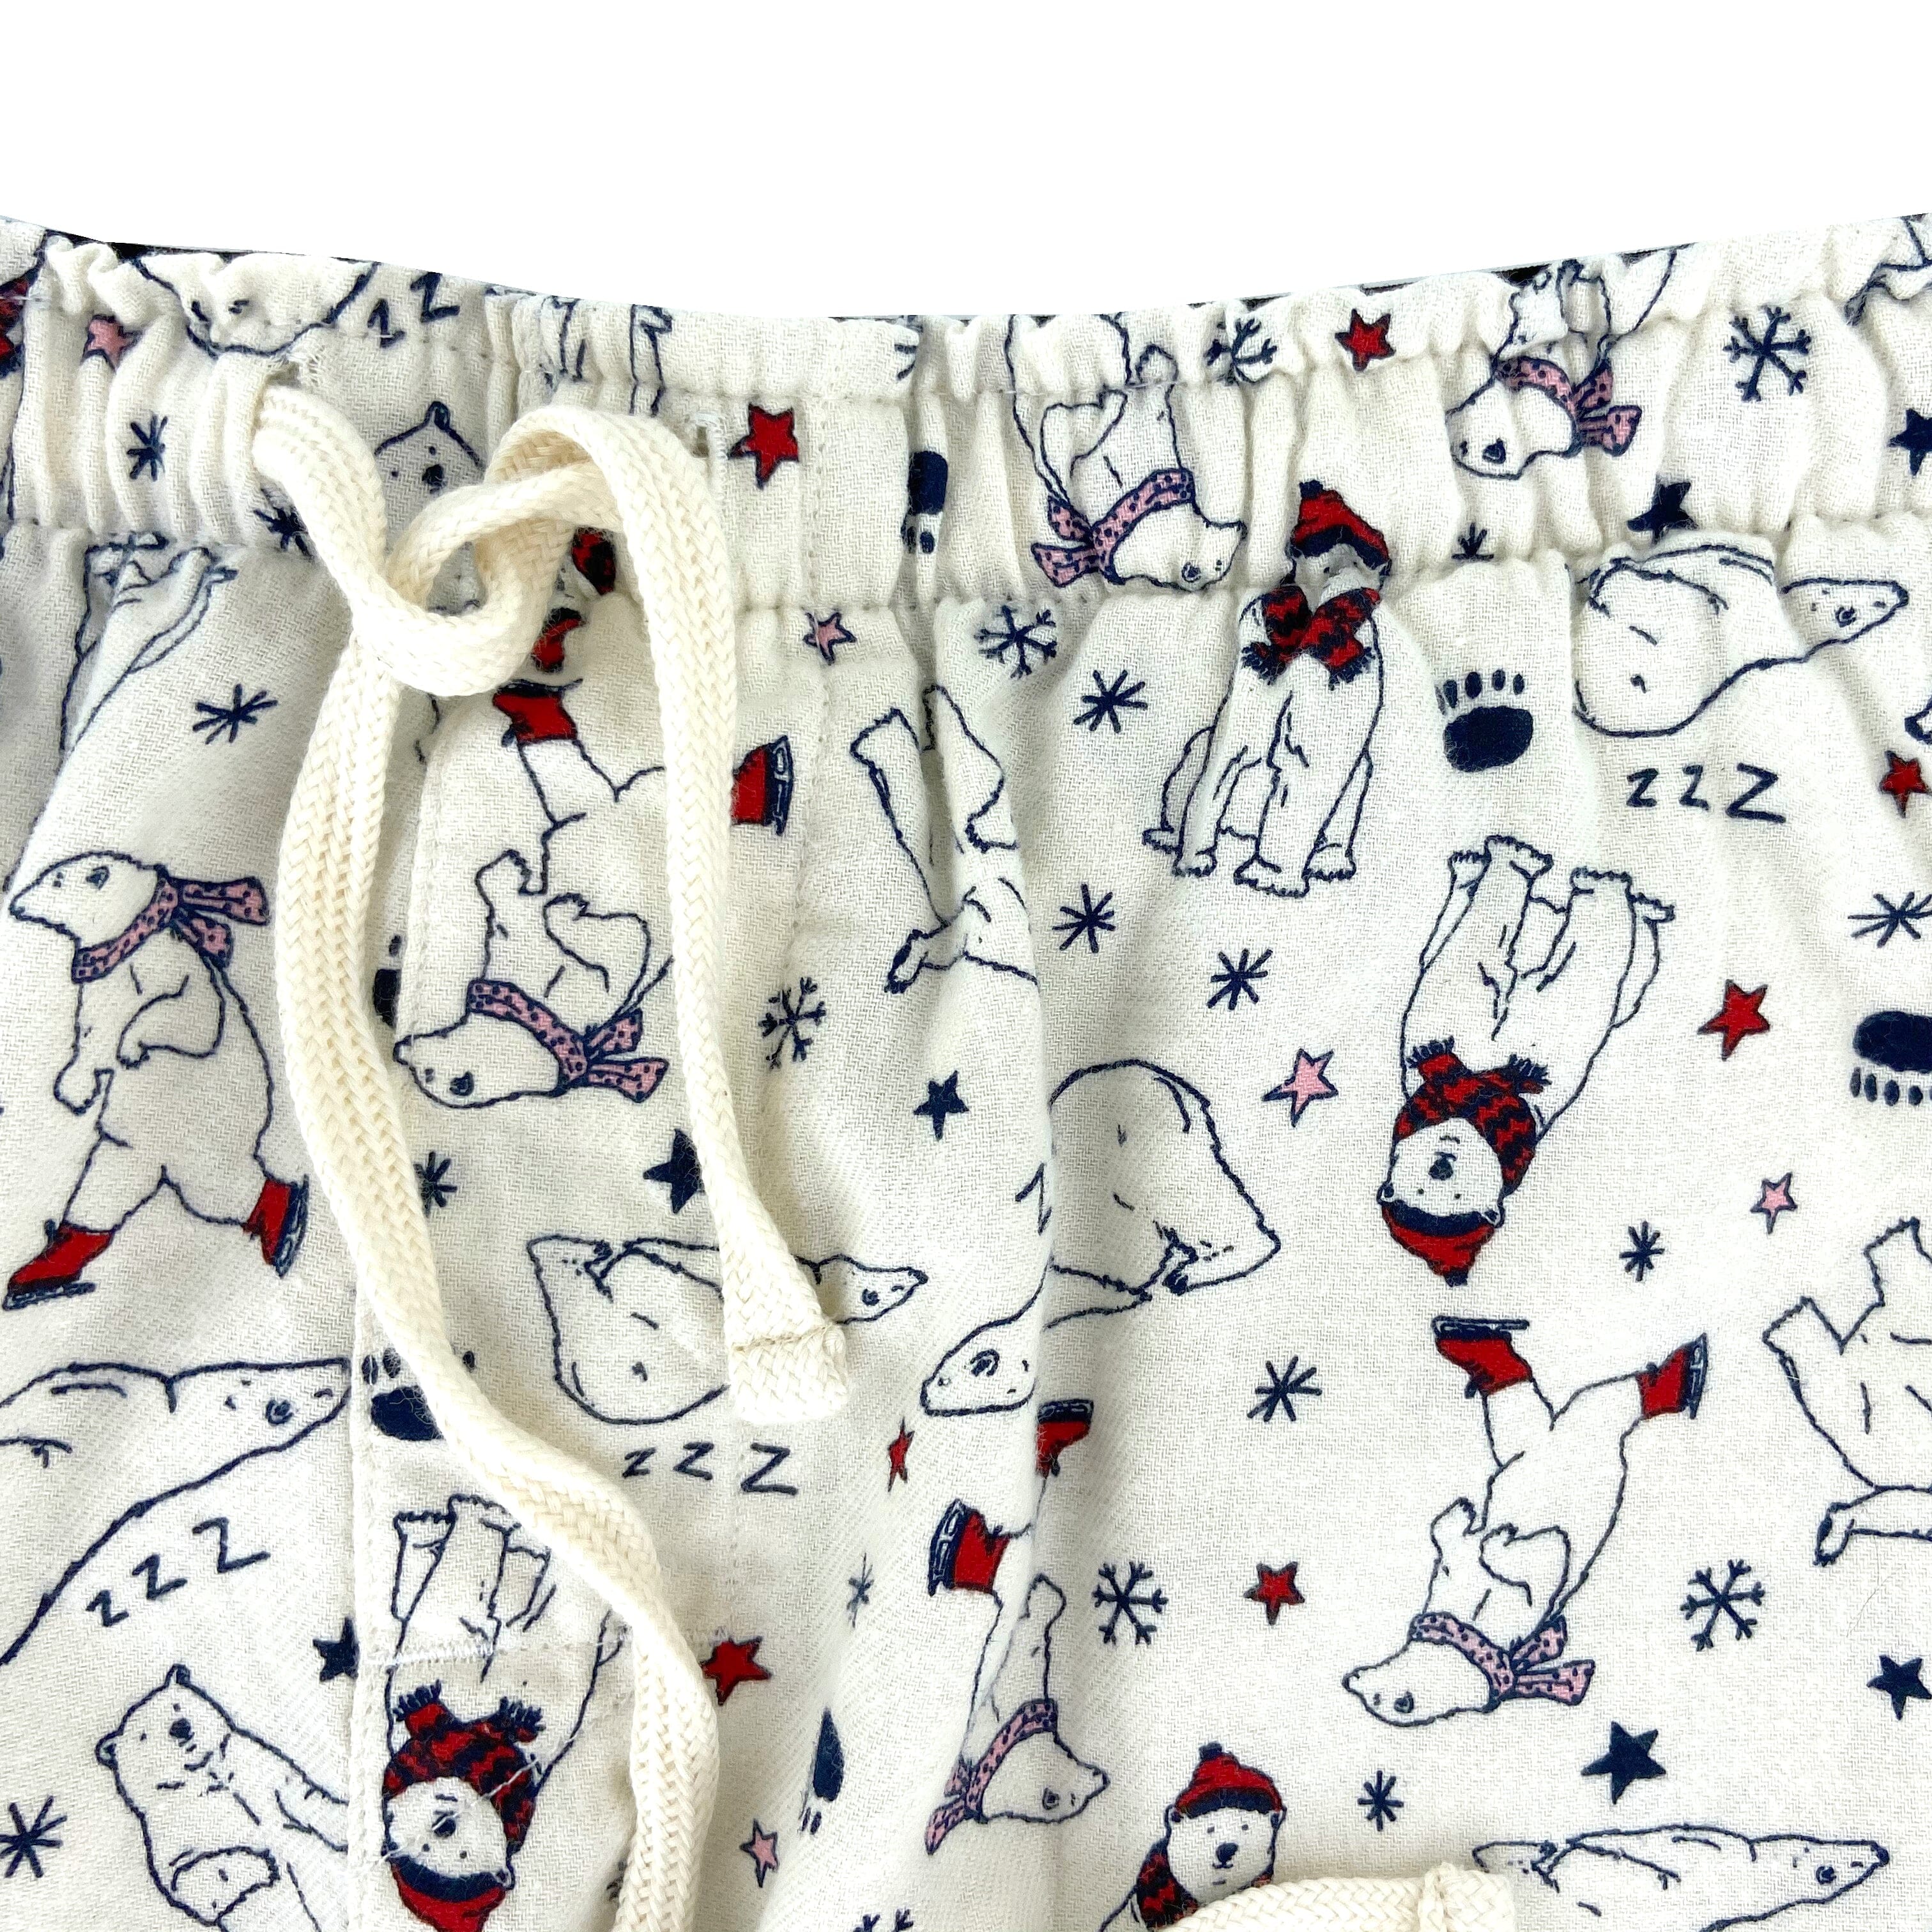 White Polar Bear Pajama Pants For Men. Men's Animal Print Lounge Pants